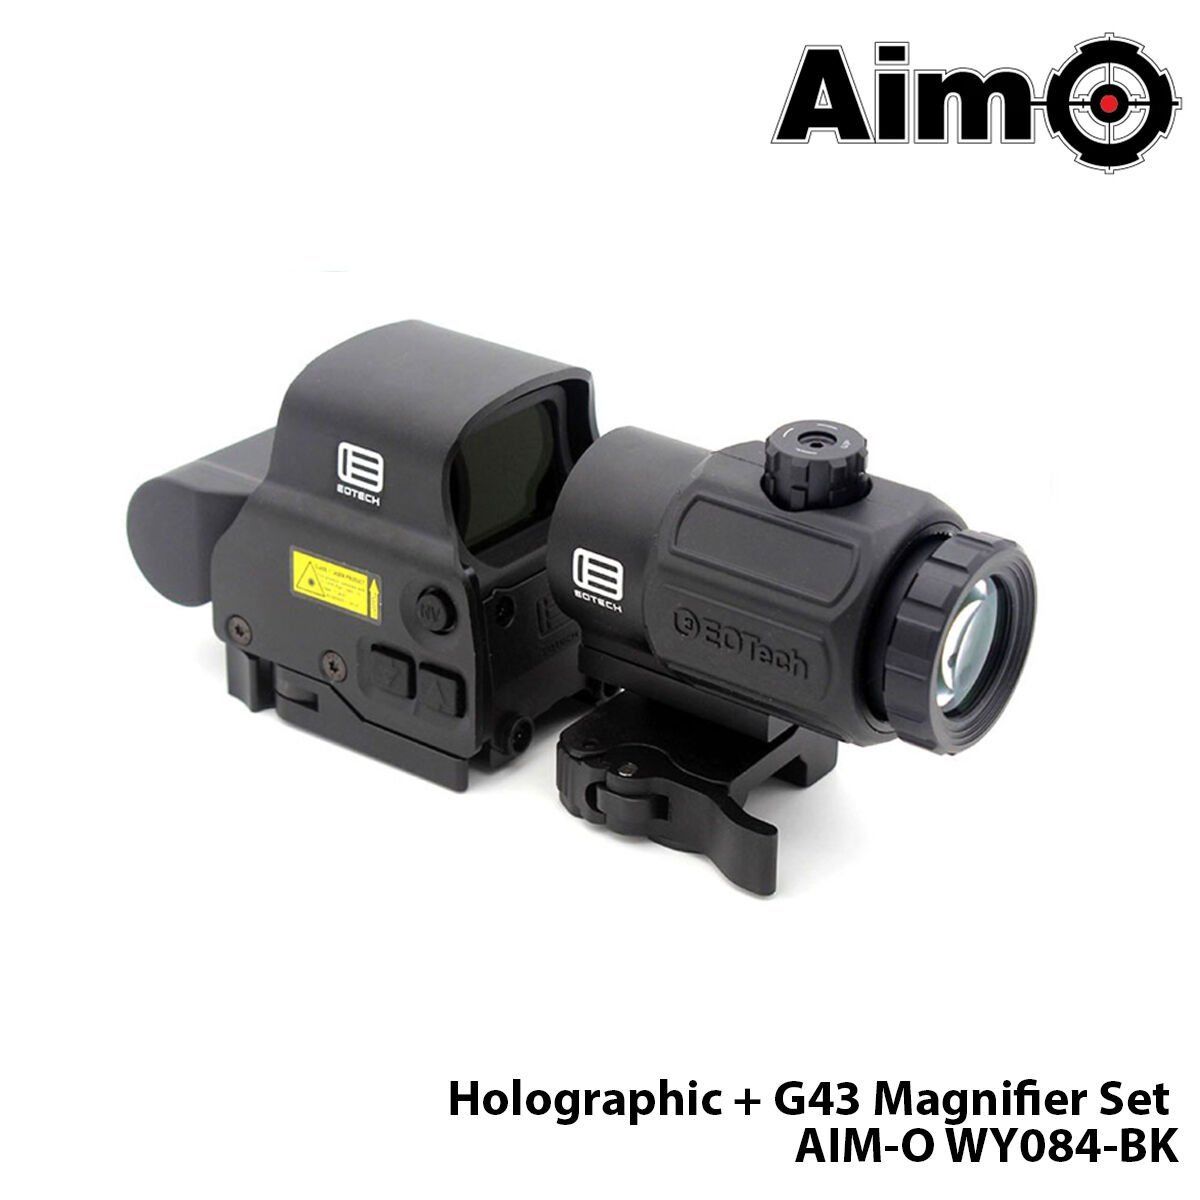 Holographic + Magnifier Set AIM-O WY084-BK